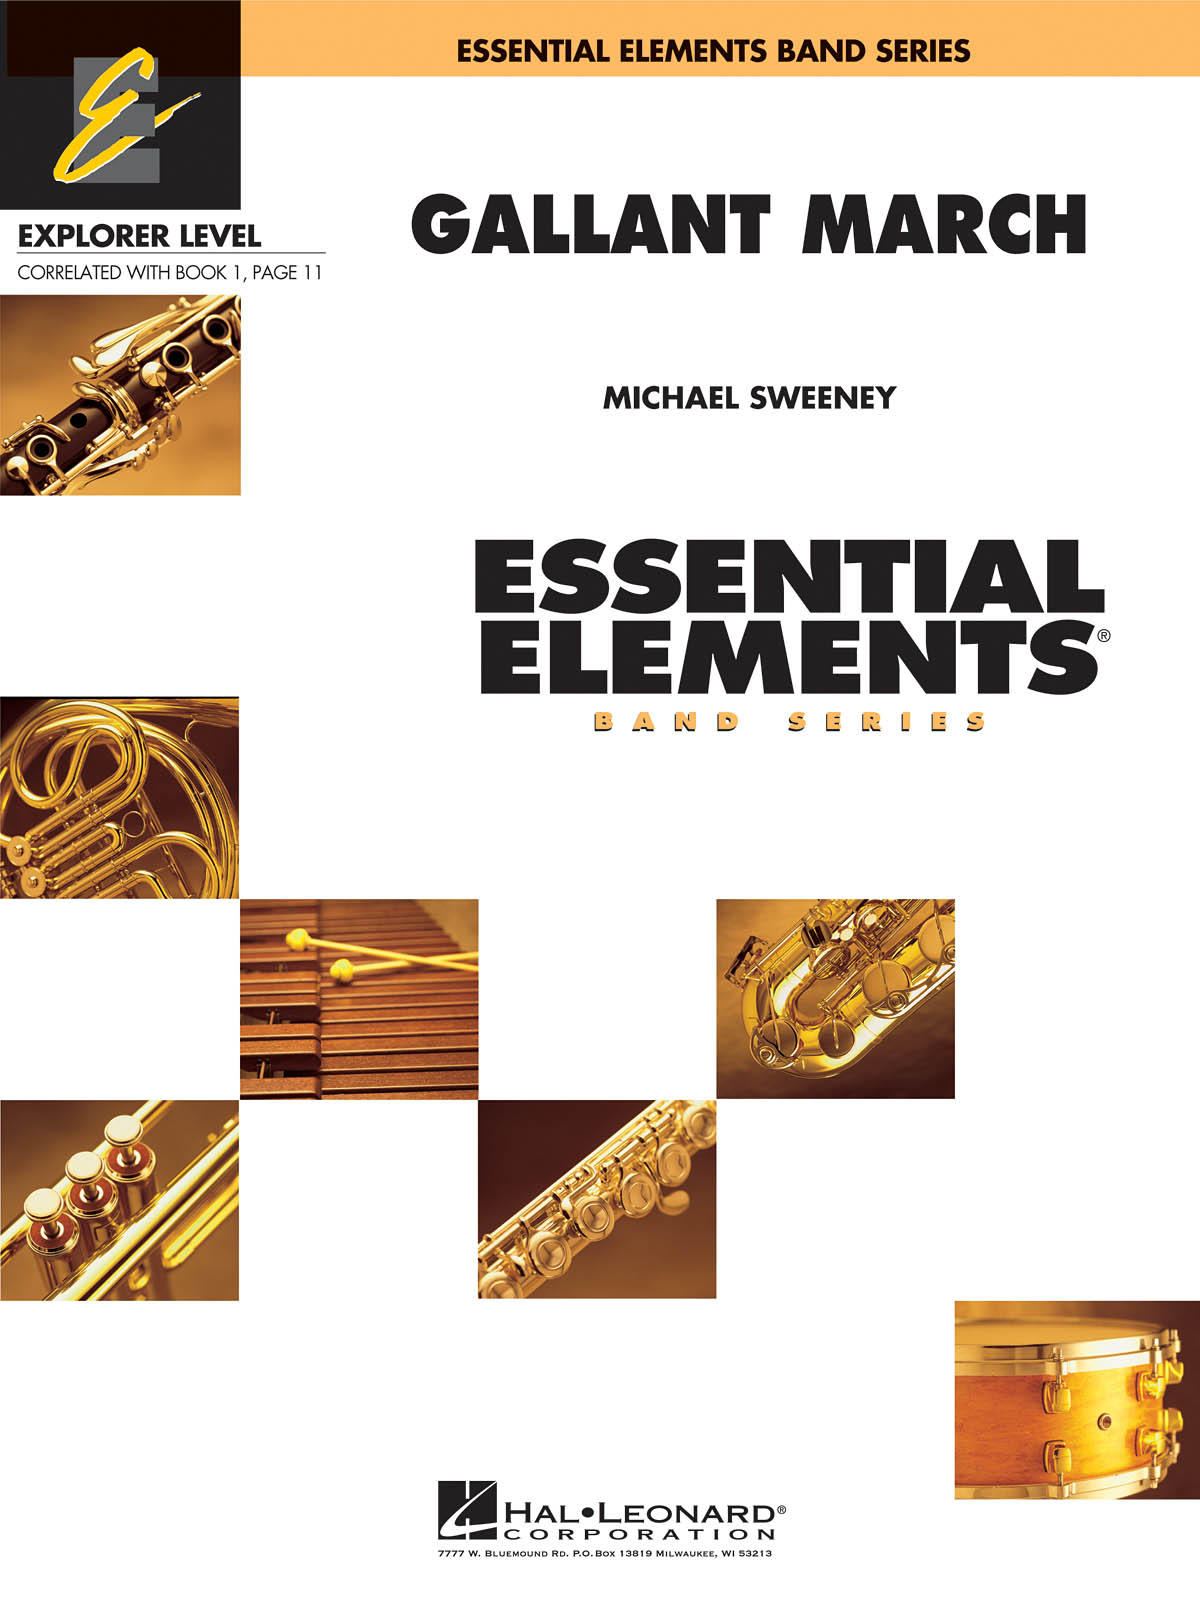 Gallant March - noty pro orchestr